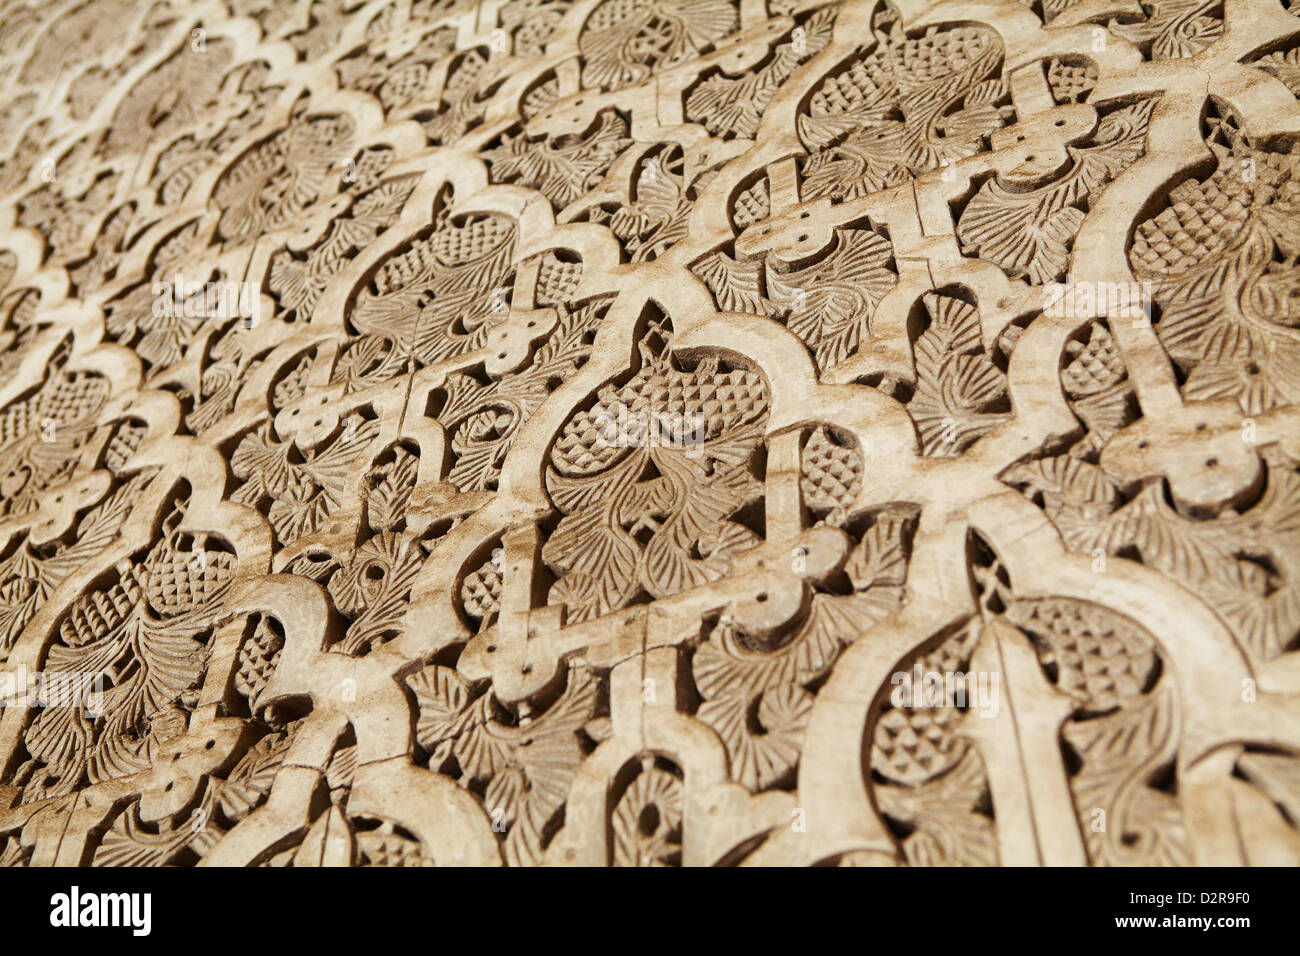 Islamic Patterns at Medrassa Ben Youssef, Marrakech Stock Photo